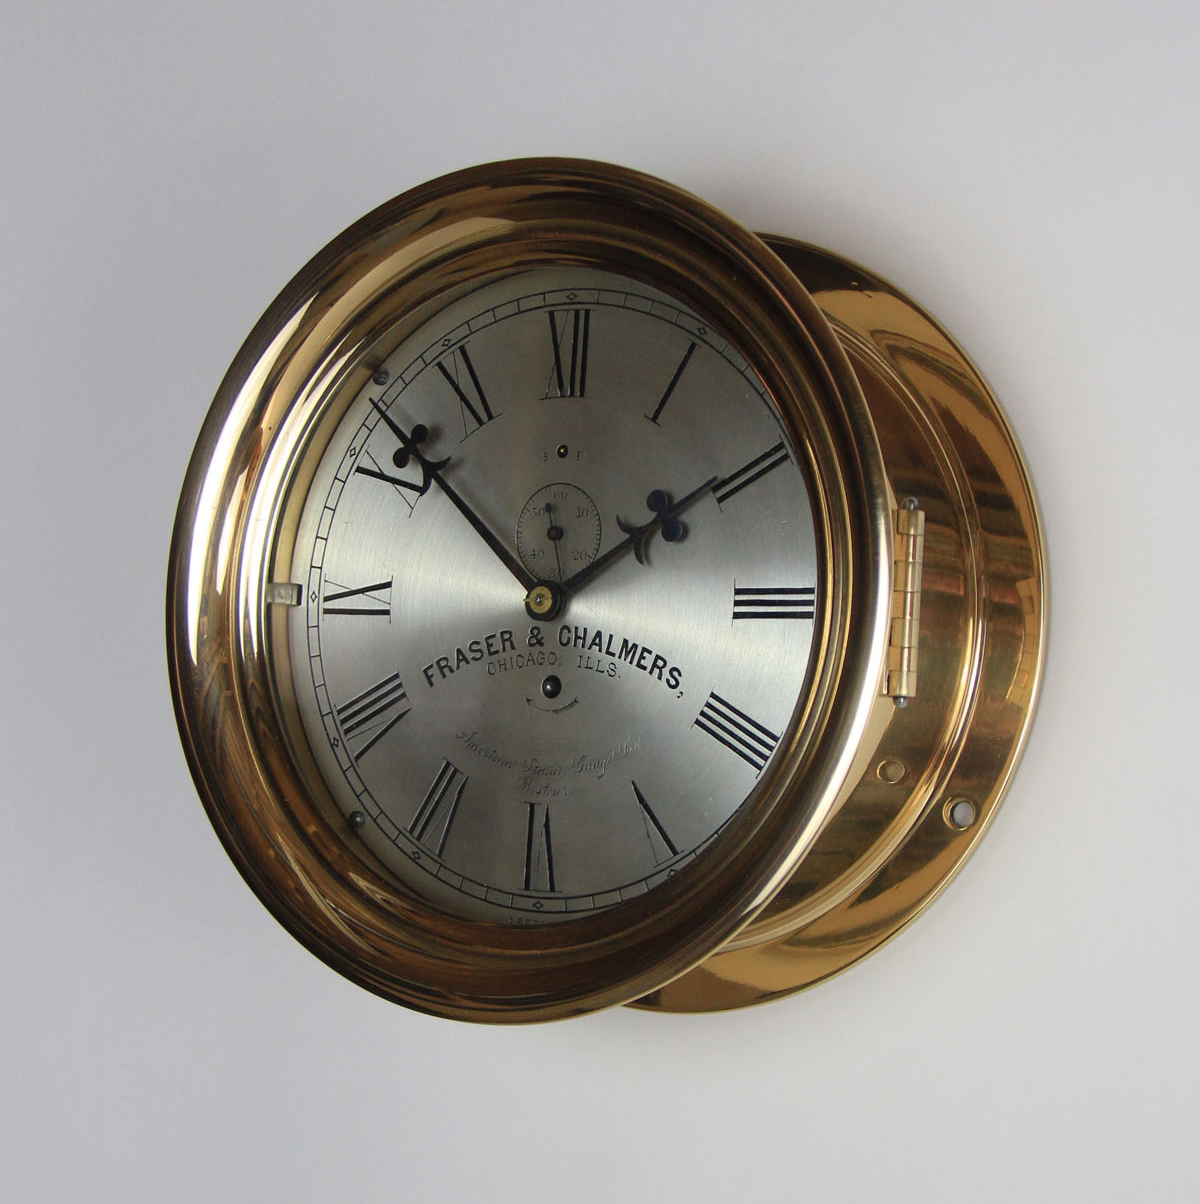 E. Howard 8 1/2" Marine Clock for Fraser Chalmers